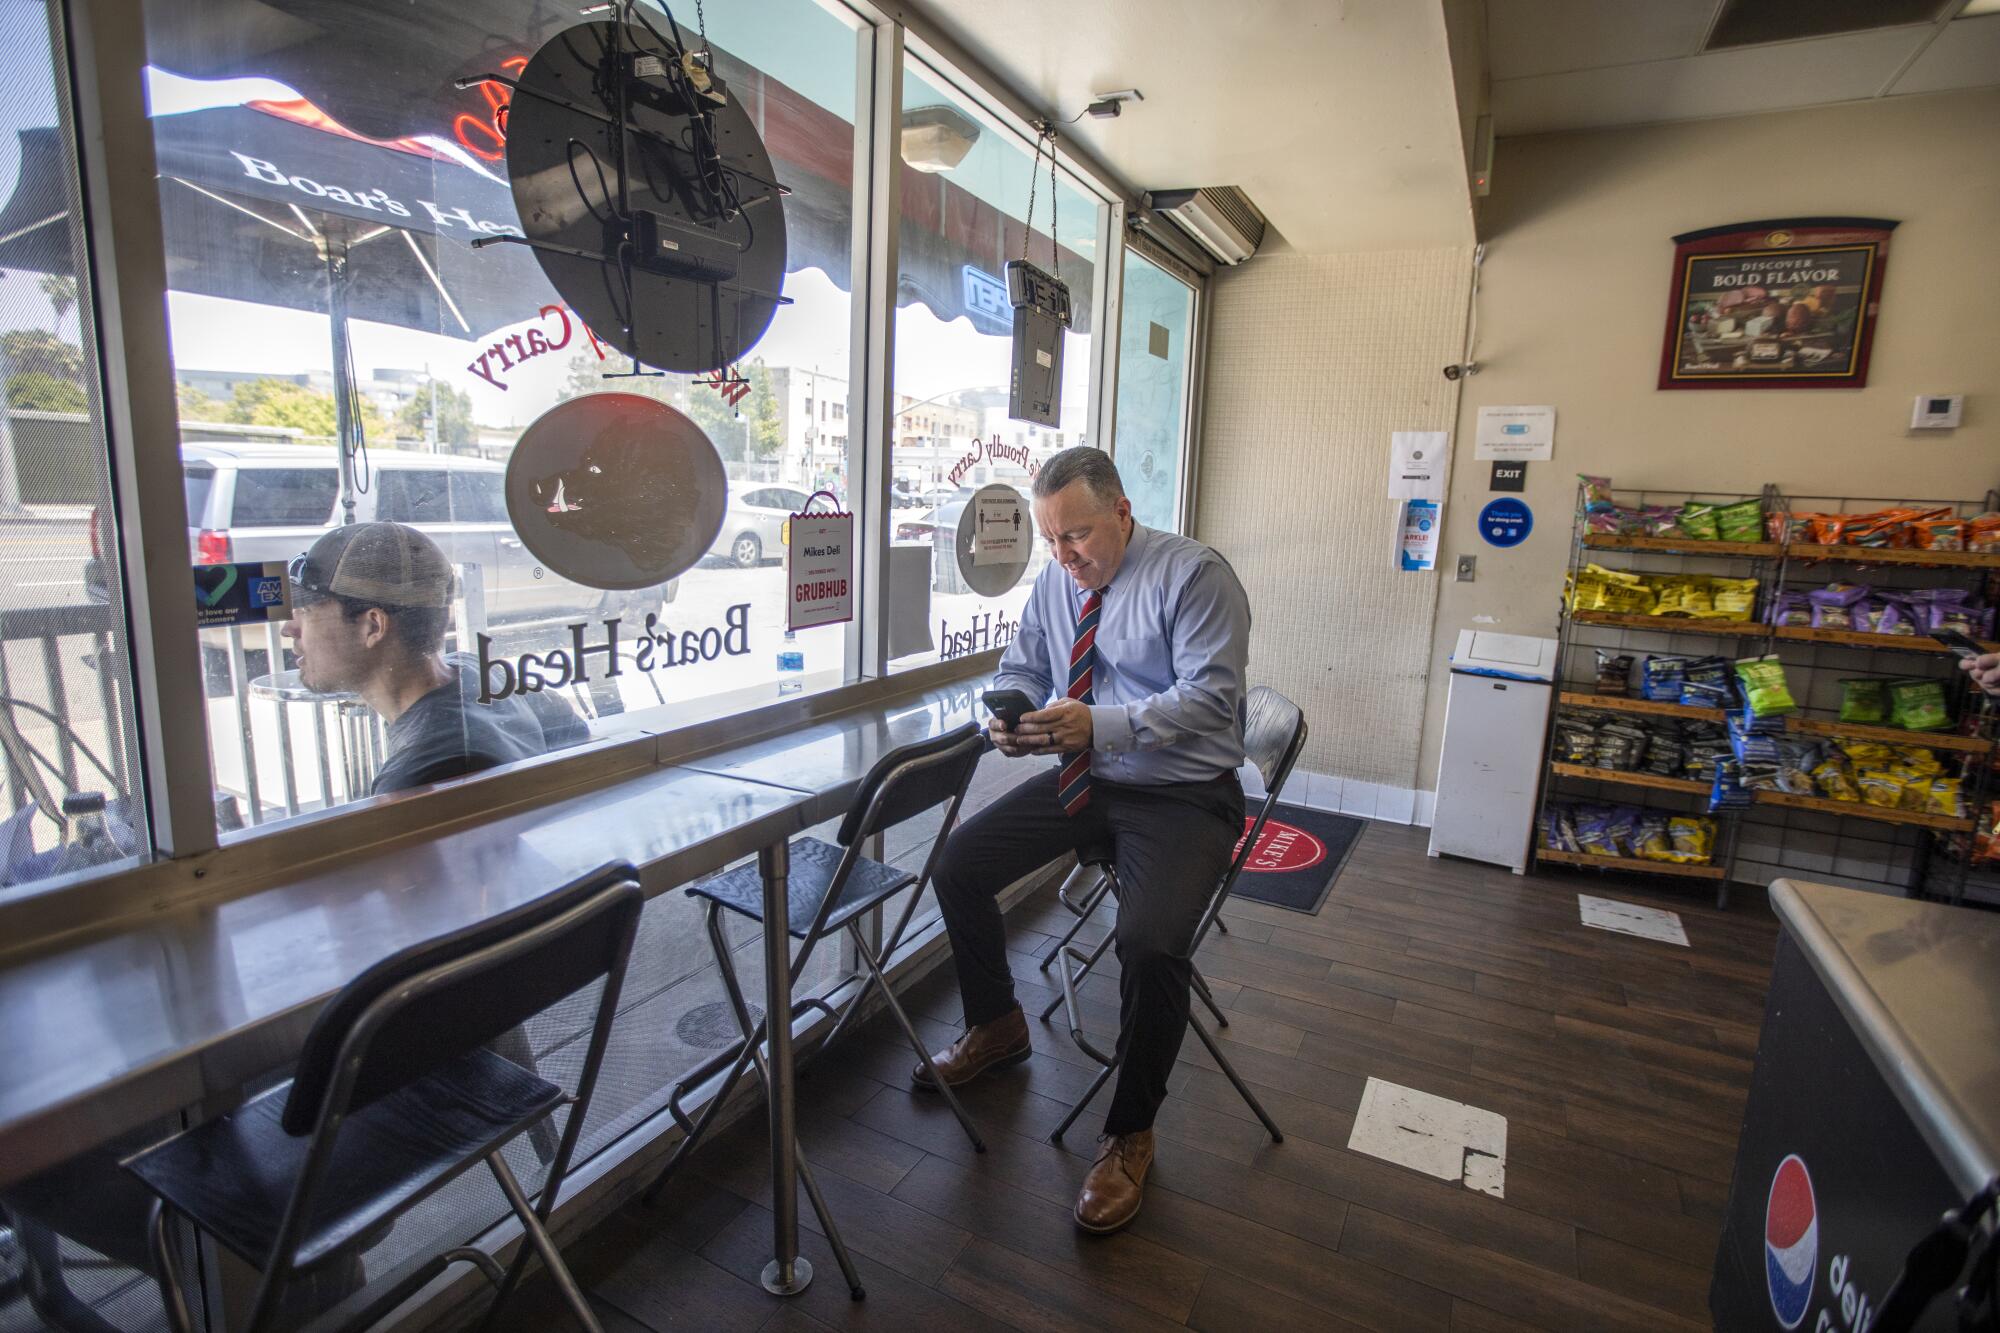 L.A. County Sheriff Alex Villanueva seated on a folding chair near a deli counter and snacks